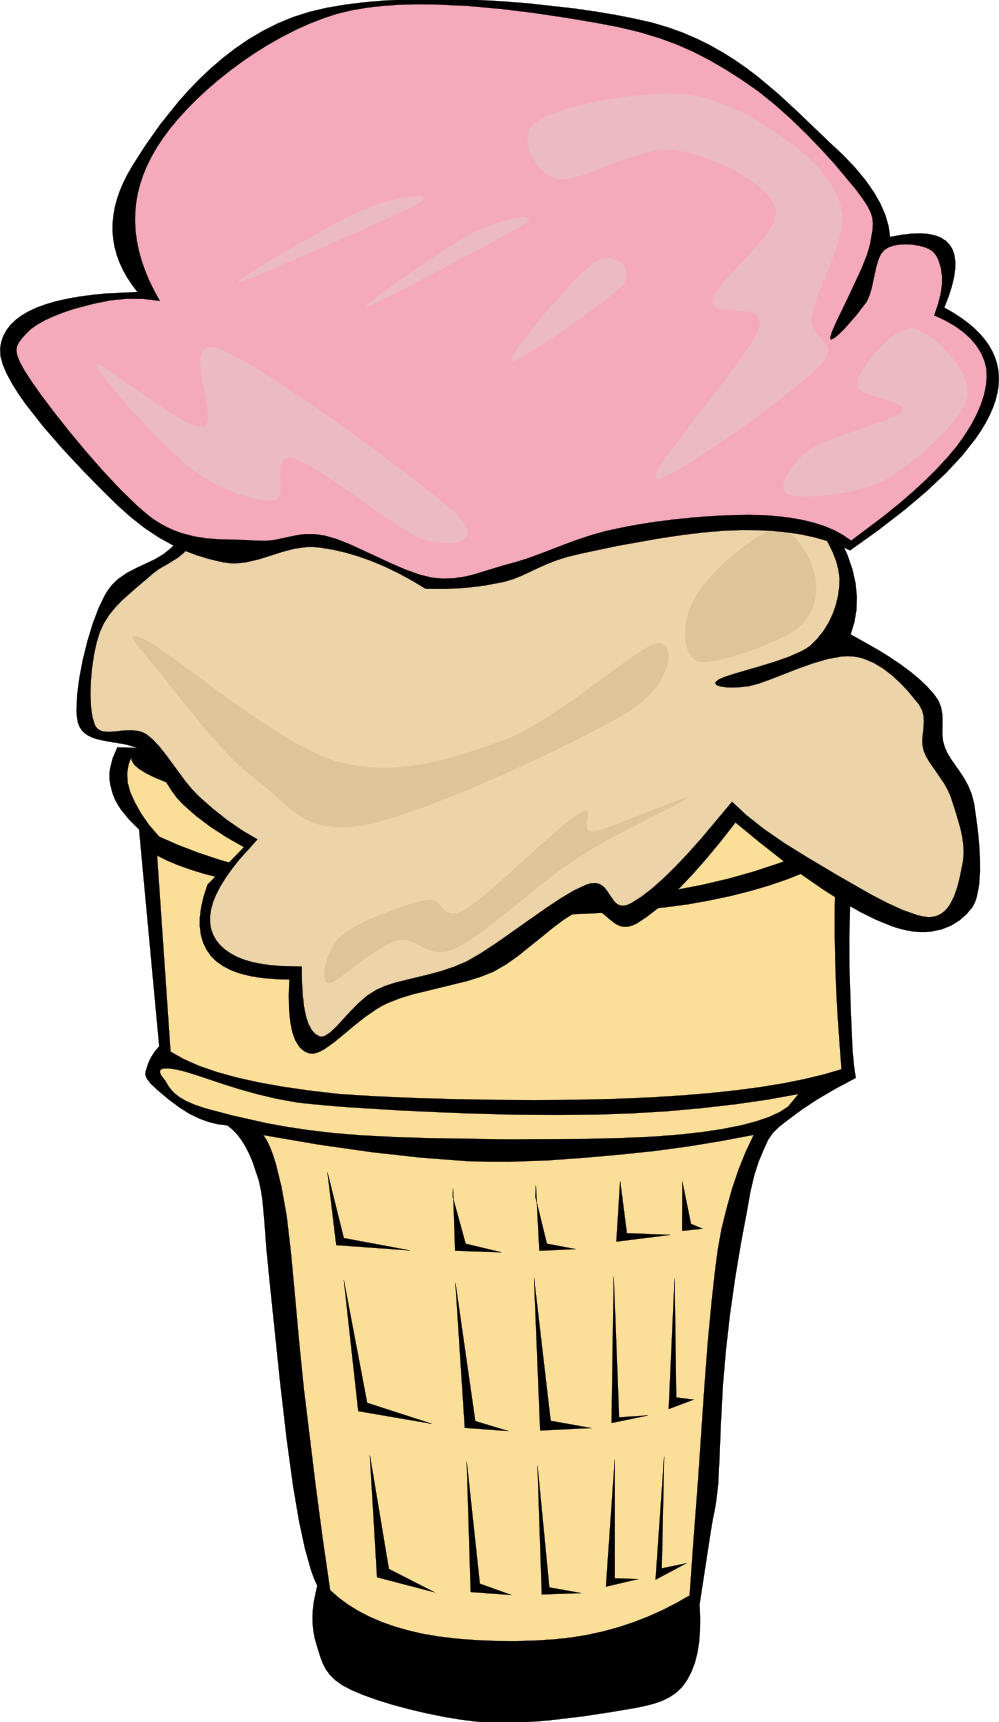 Empty ice cream cone. Sundae clipart gelato italian